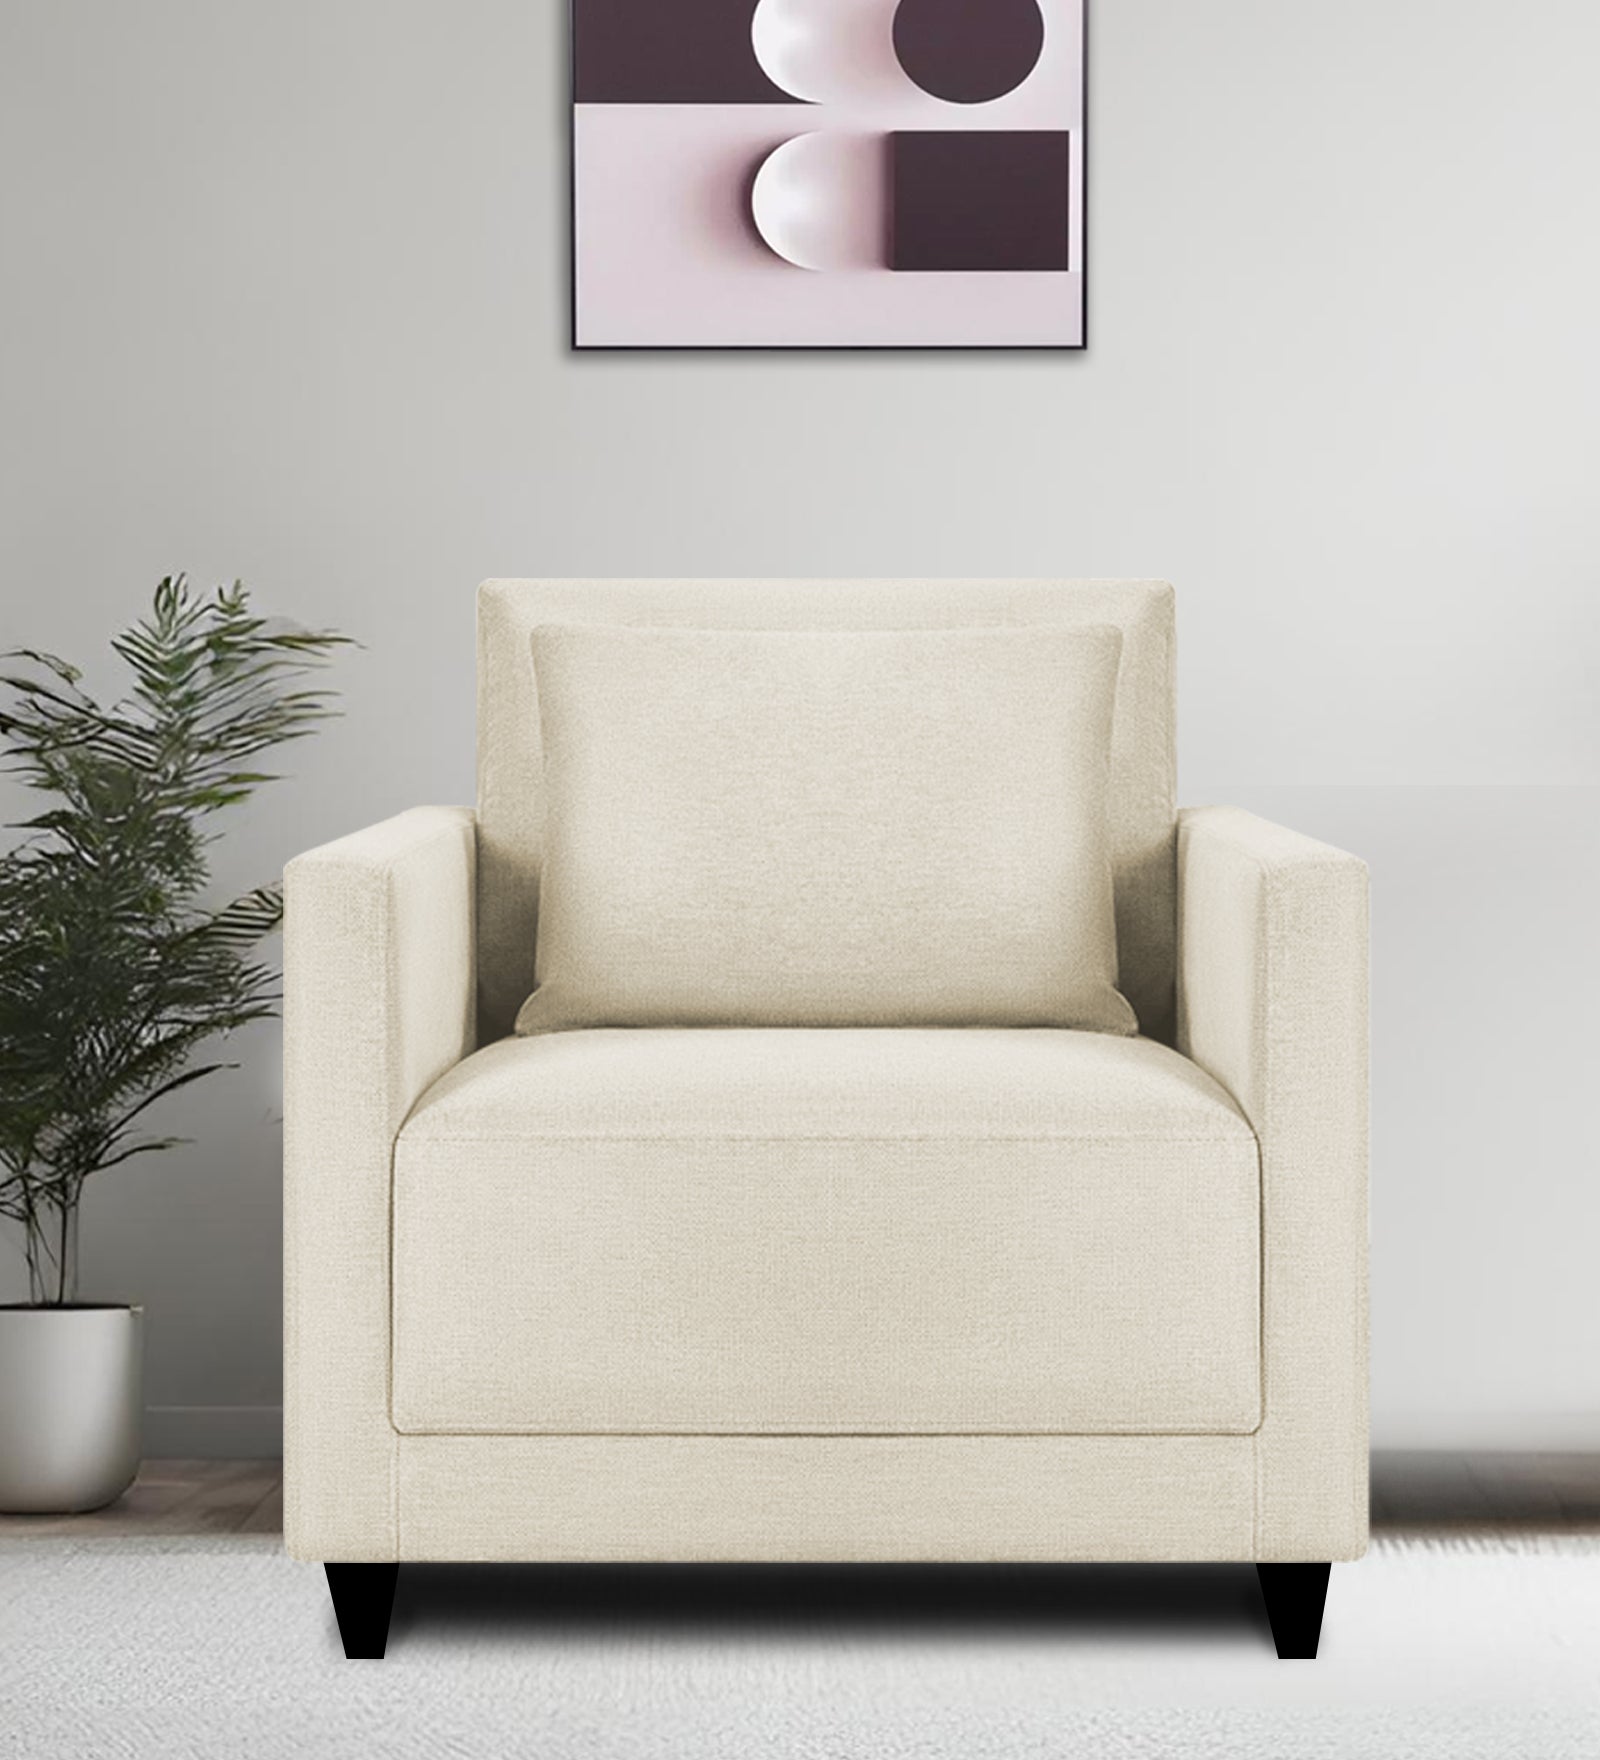 Kera Fabric 1 Seater Sofa in Ivory Cream Colour